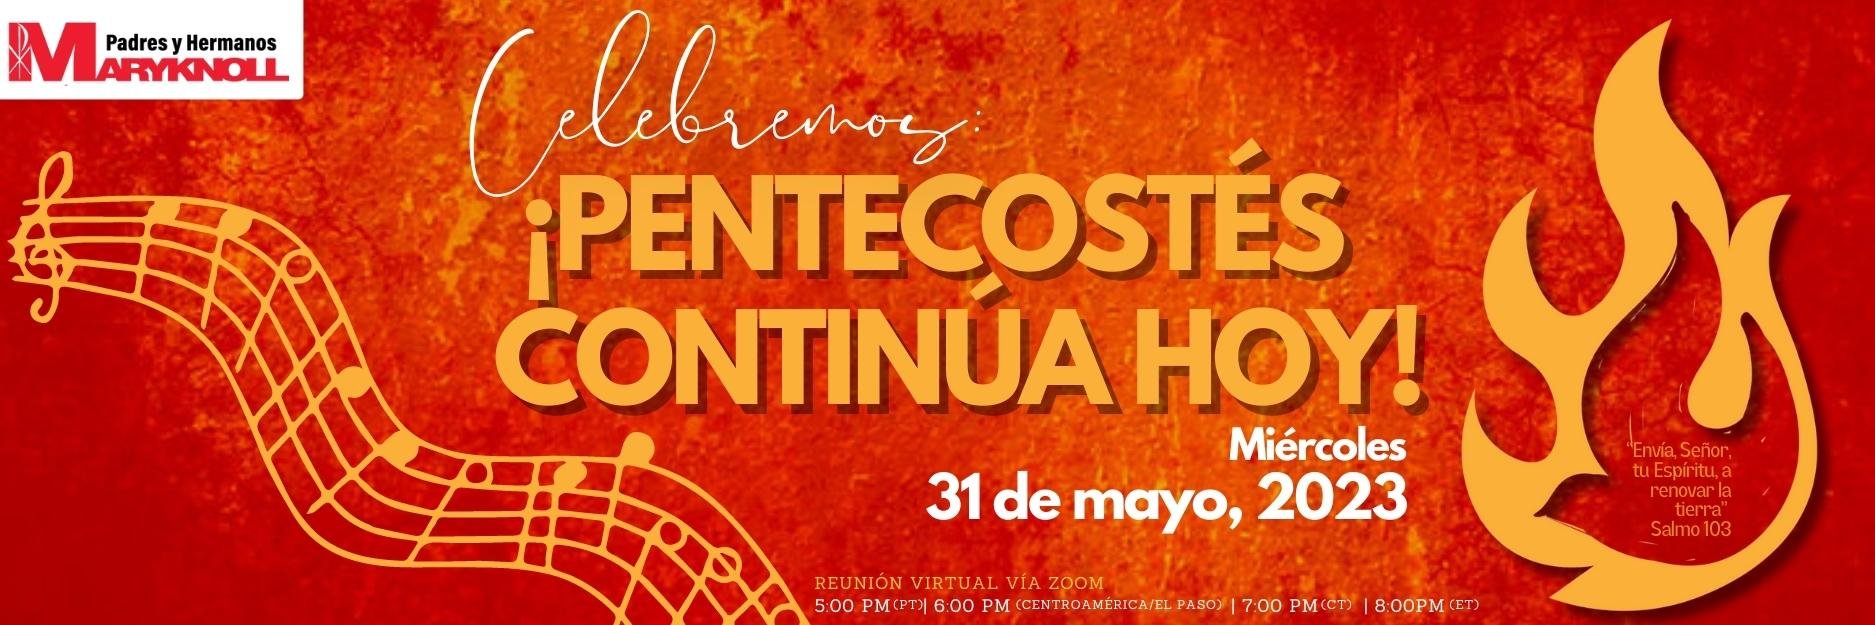 Banner ¡CELEBREMOS PENTECOSTÉS CONTINÚA HOY! (Facebook Cover) (Email Header)